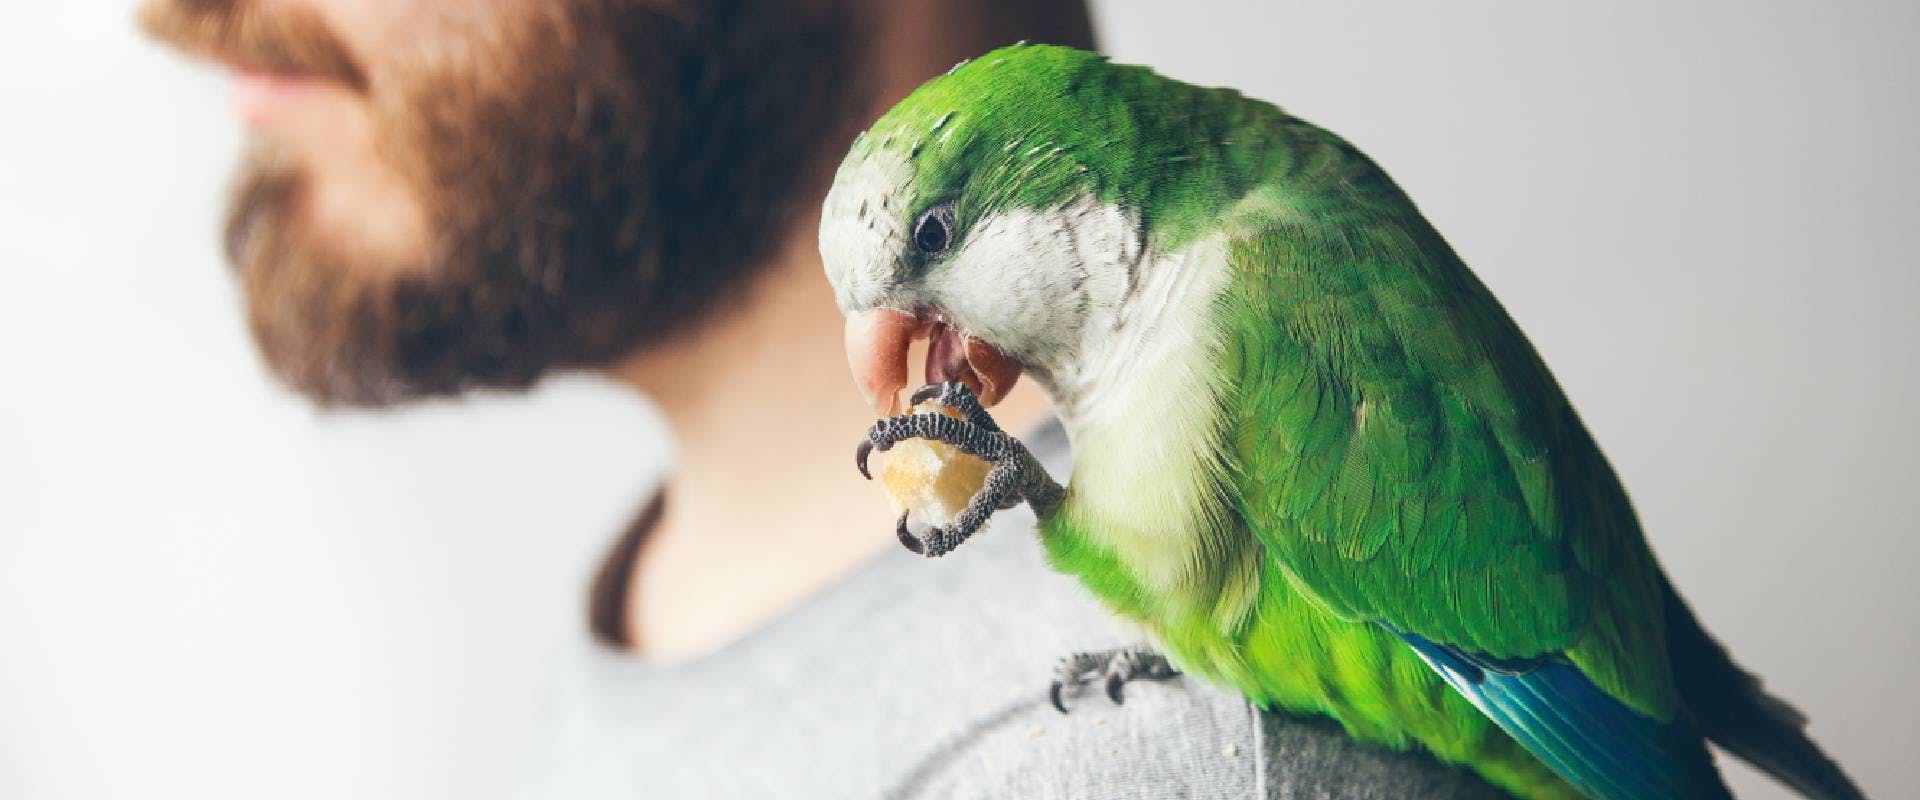 Green bird sitting on a man's shoulder